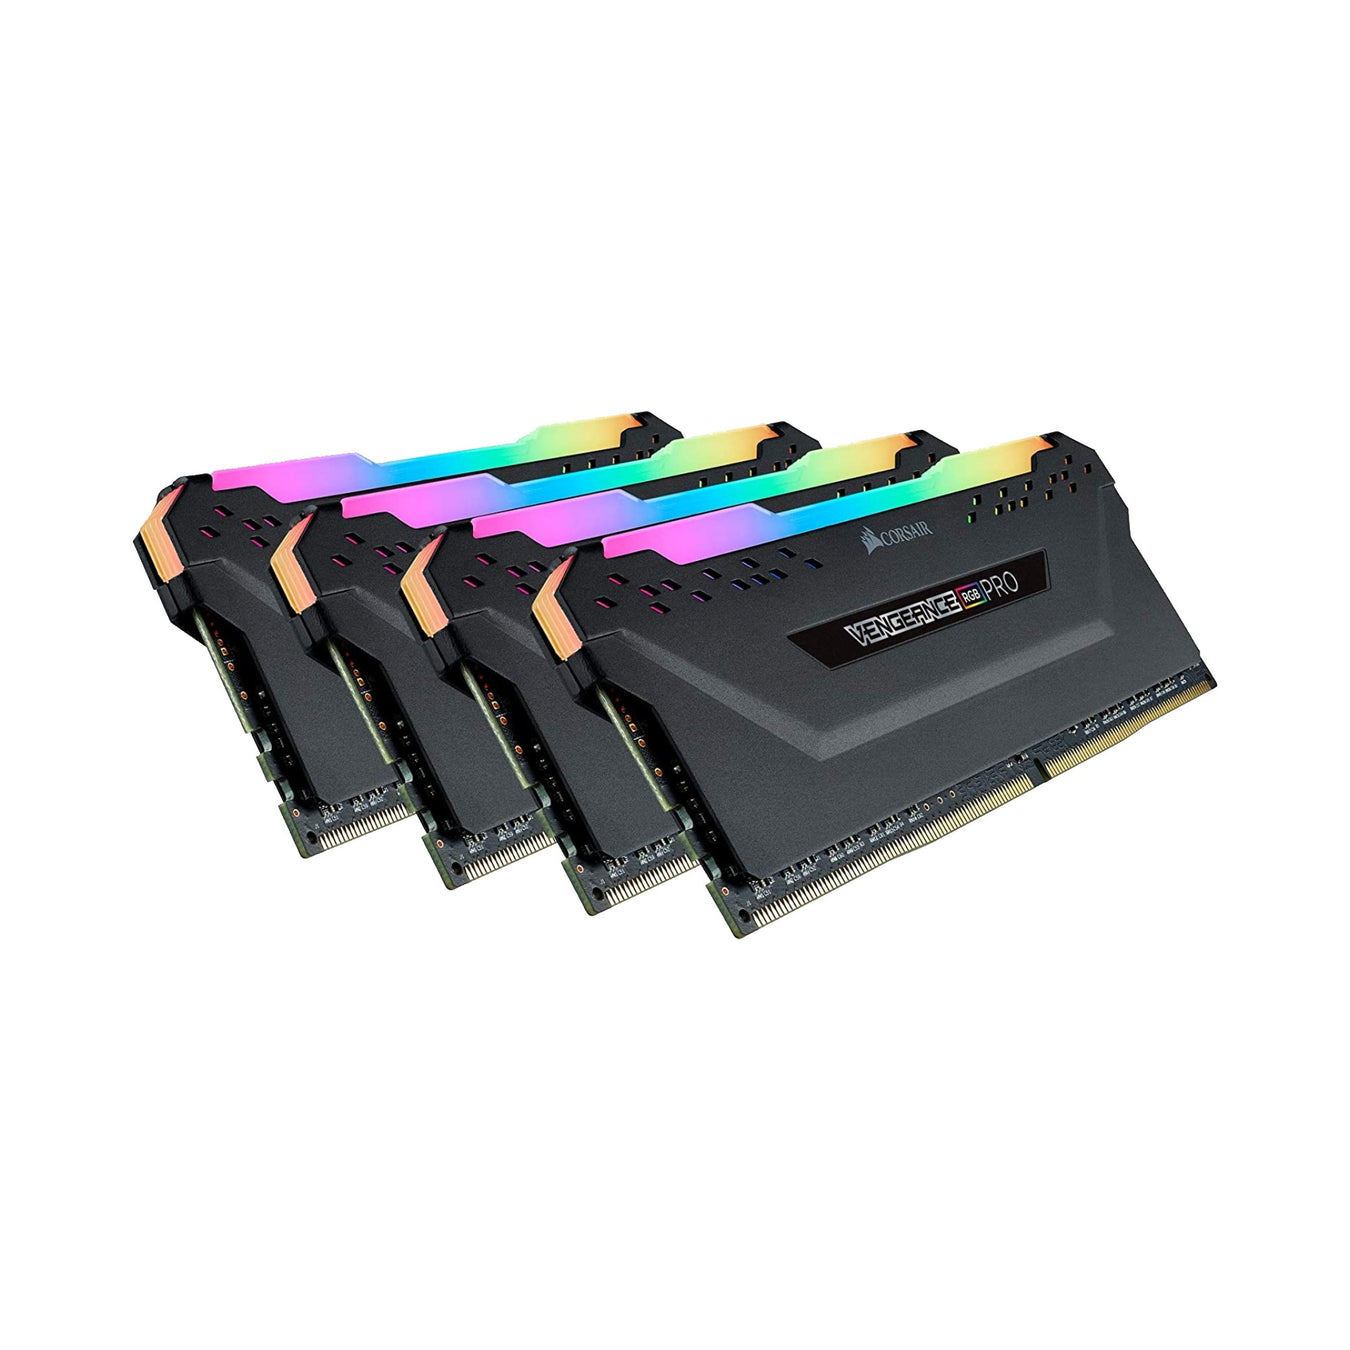 DDR4, DDR5 desktop memory ram.